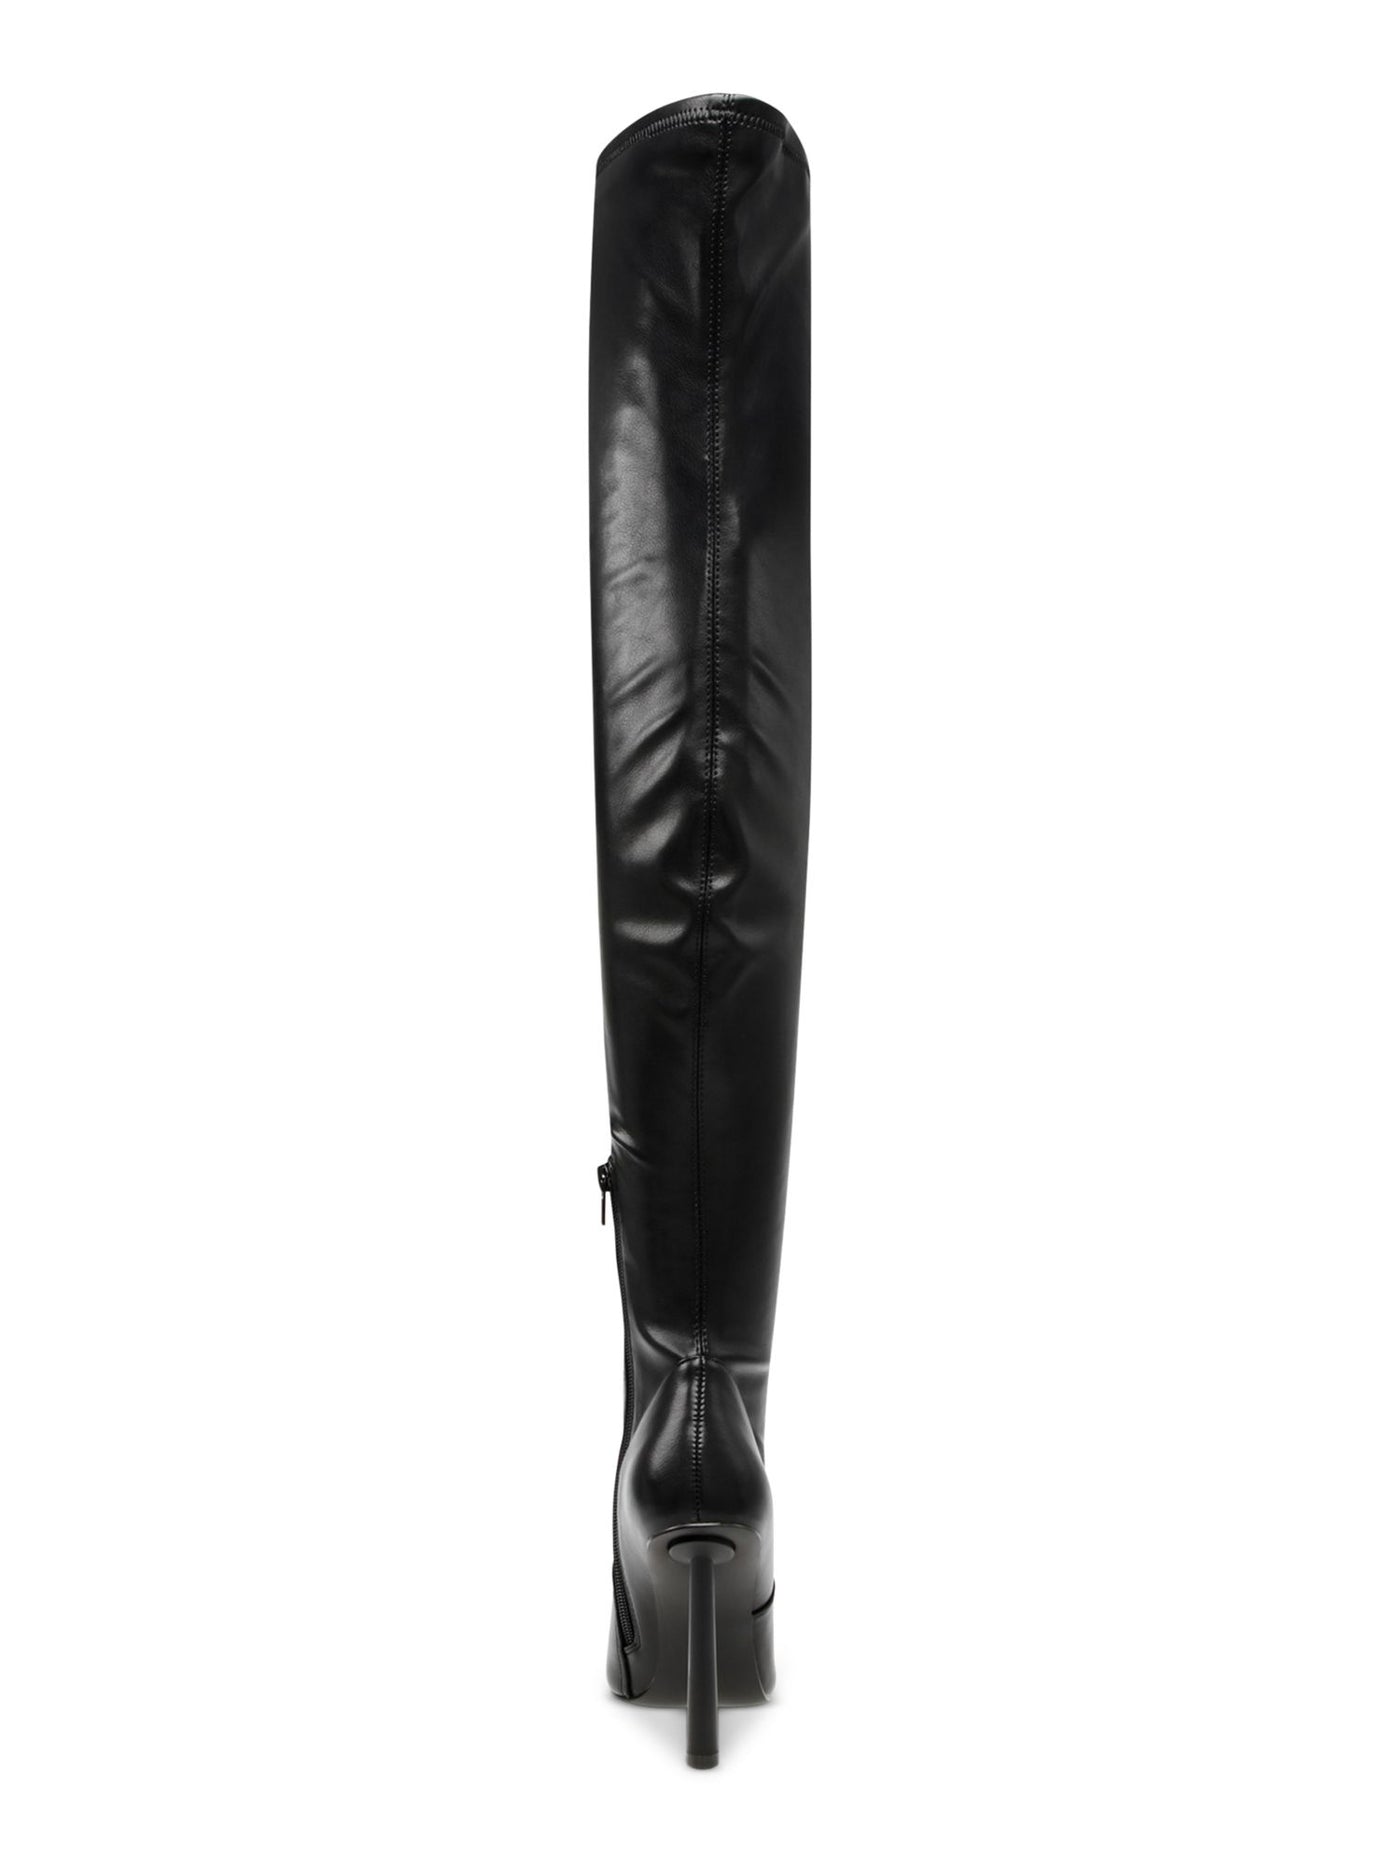 STEVE MADDEN Womens Black Padded Vivee Pointed Toe Sculpted Heel Zip-Up Dress Boots 7.5 M